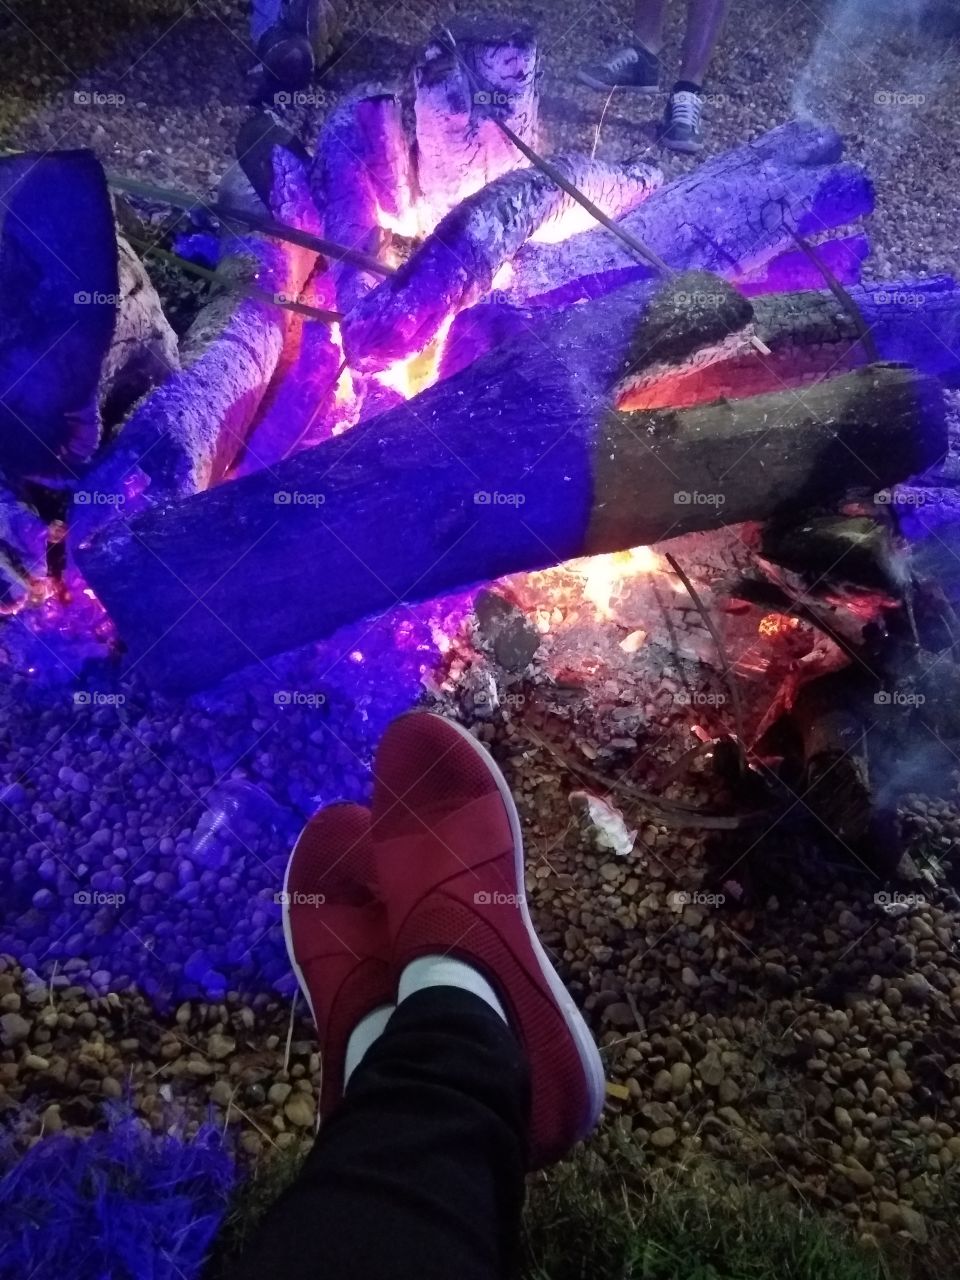 Warming my feet at the fire... Aquecendo meus pés na fogueira...